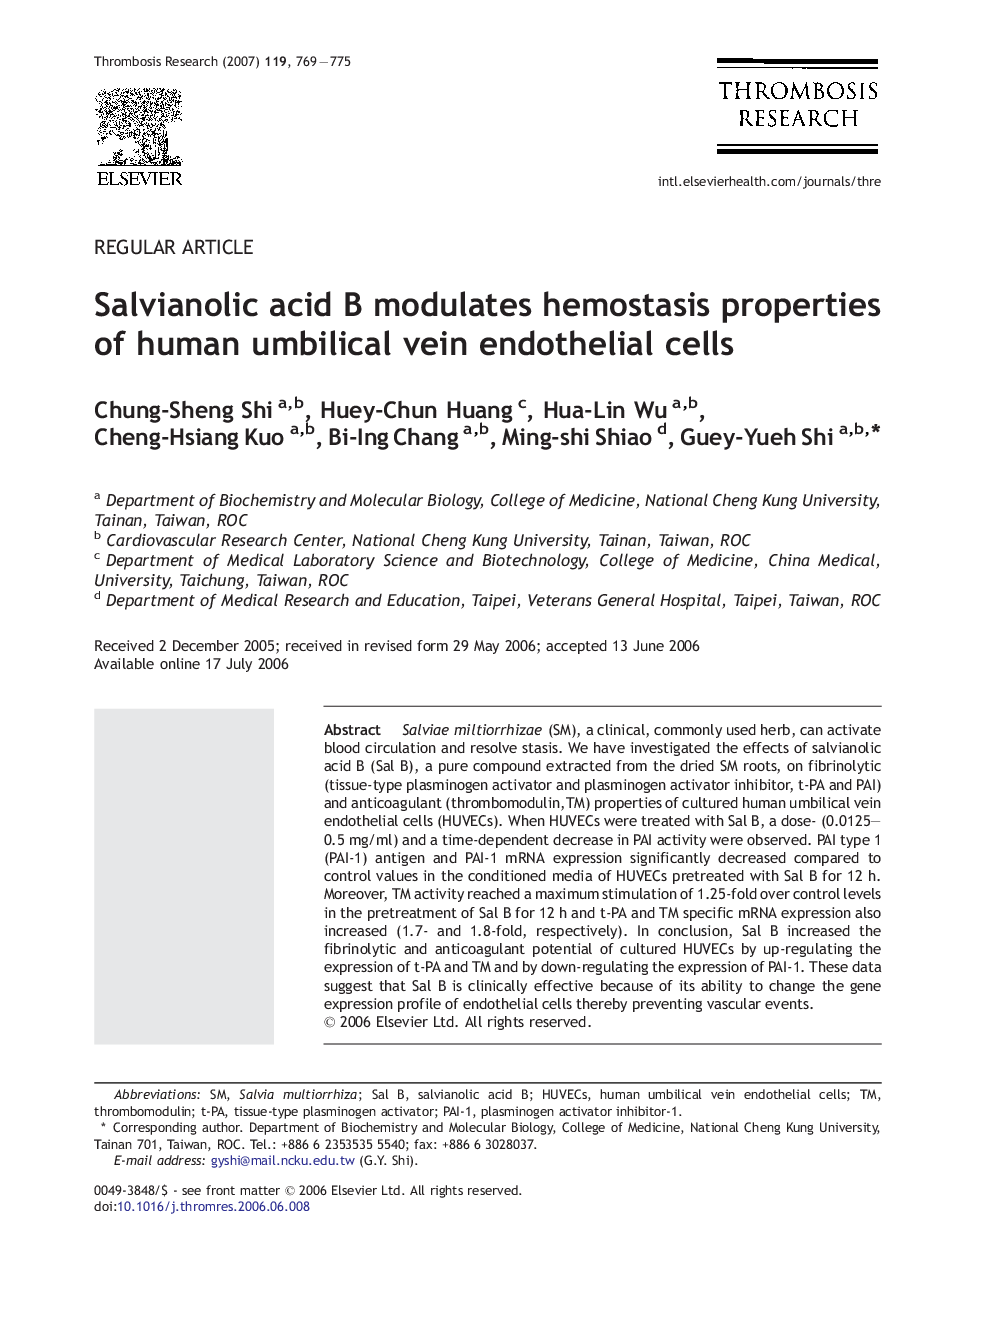 Salvianolic acid B modulates hemostasis properties of human umbilical vein endothelial cells